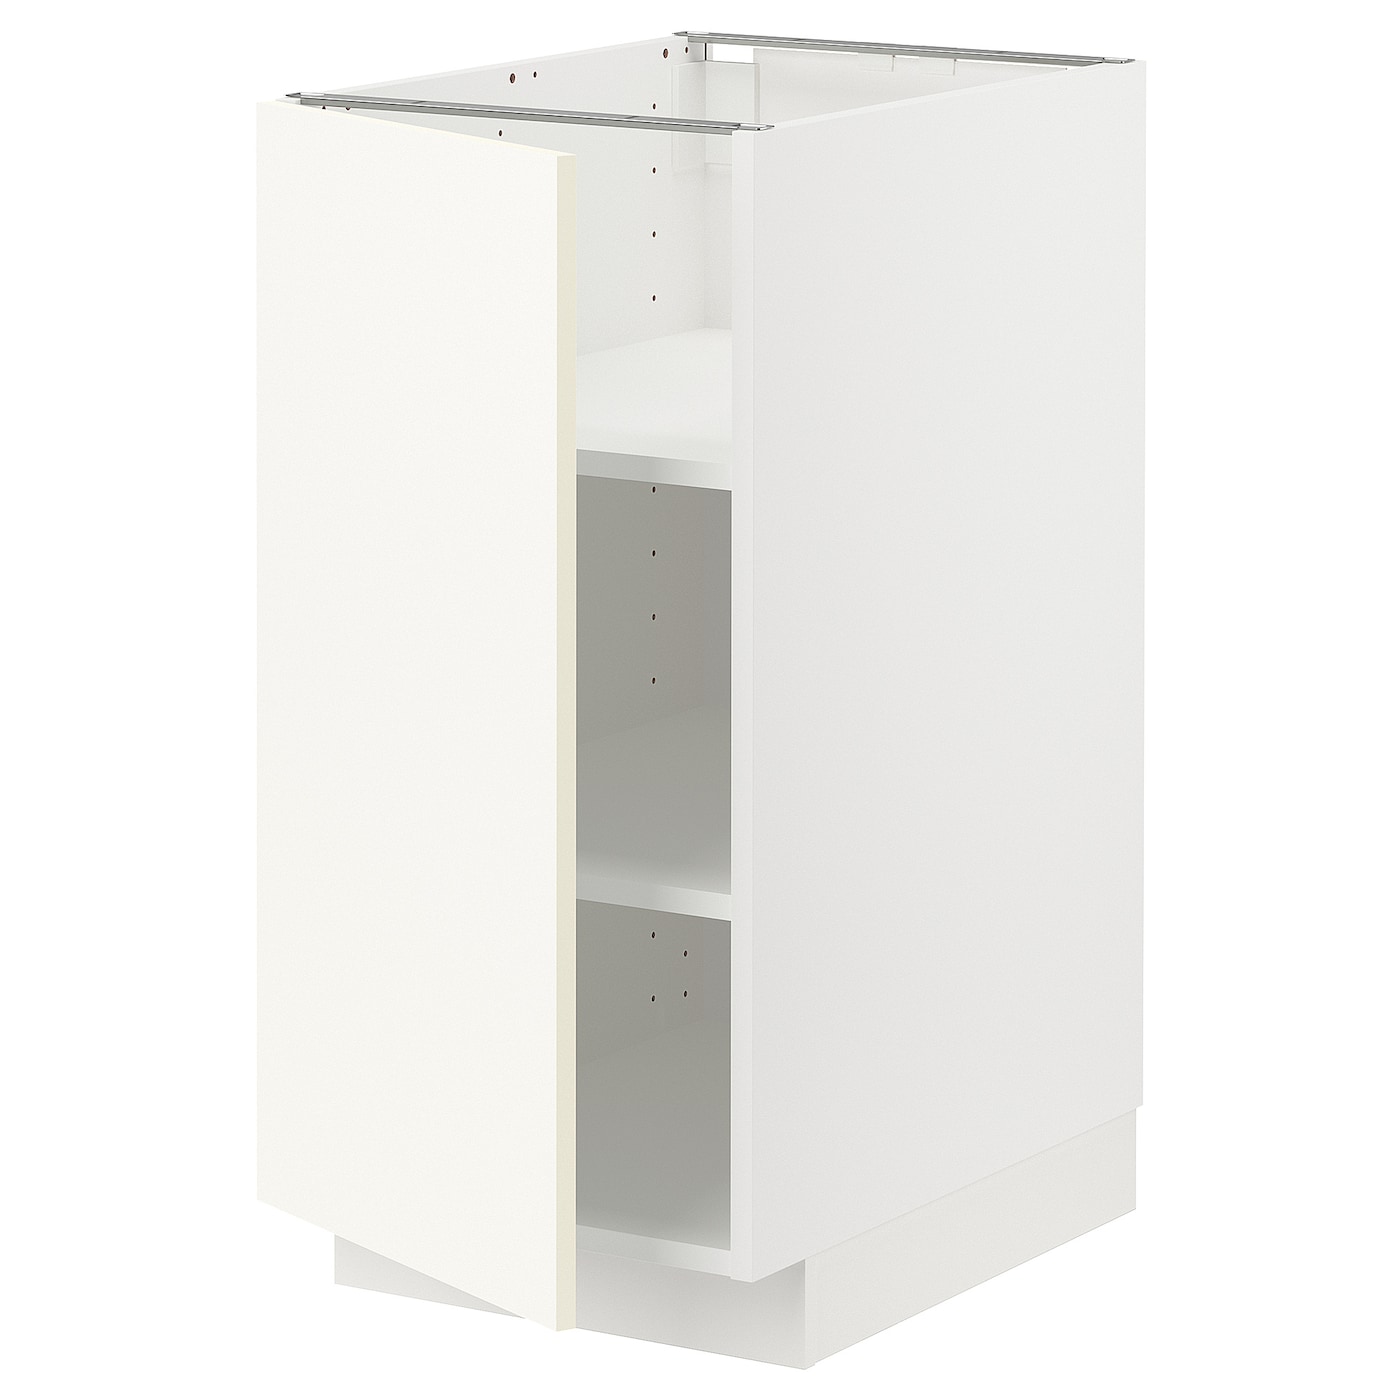 Напольный шкаф - METOD IKEA/ МЕТОД ИКЕА,  88х460 см, белый